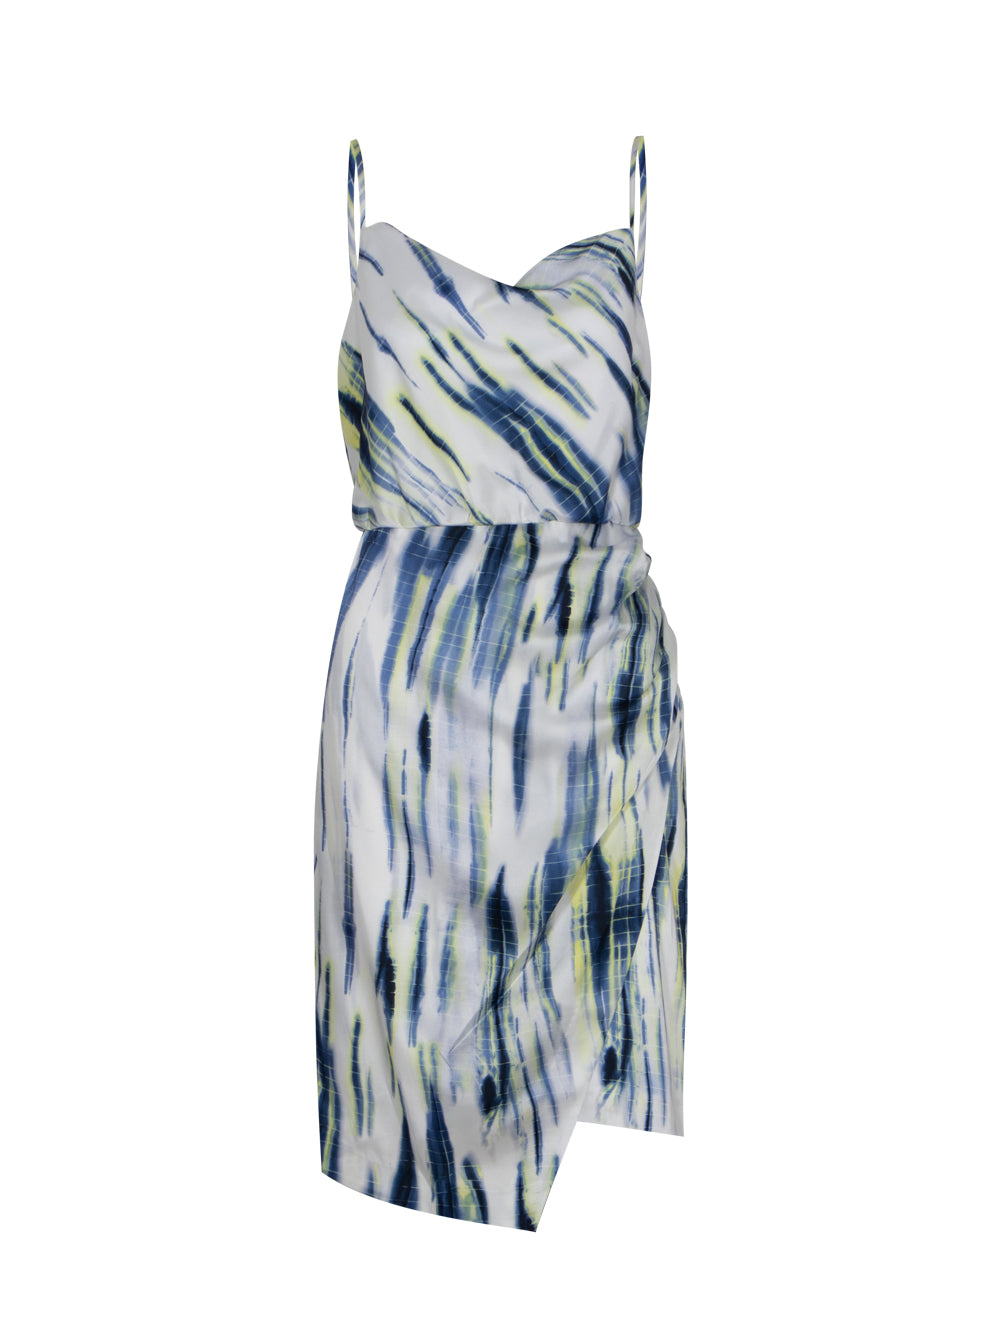 Sleeveless Cowl Neckline Print Dress (White/Inky/Blue/Multi)